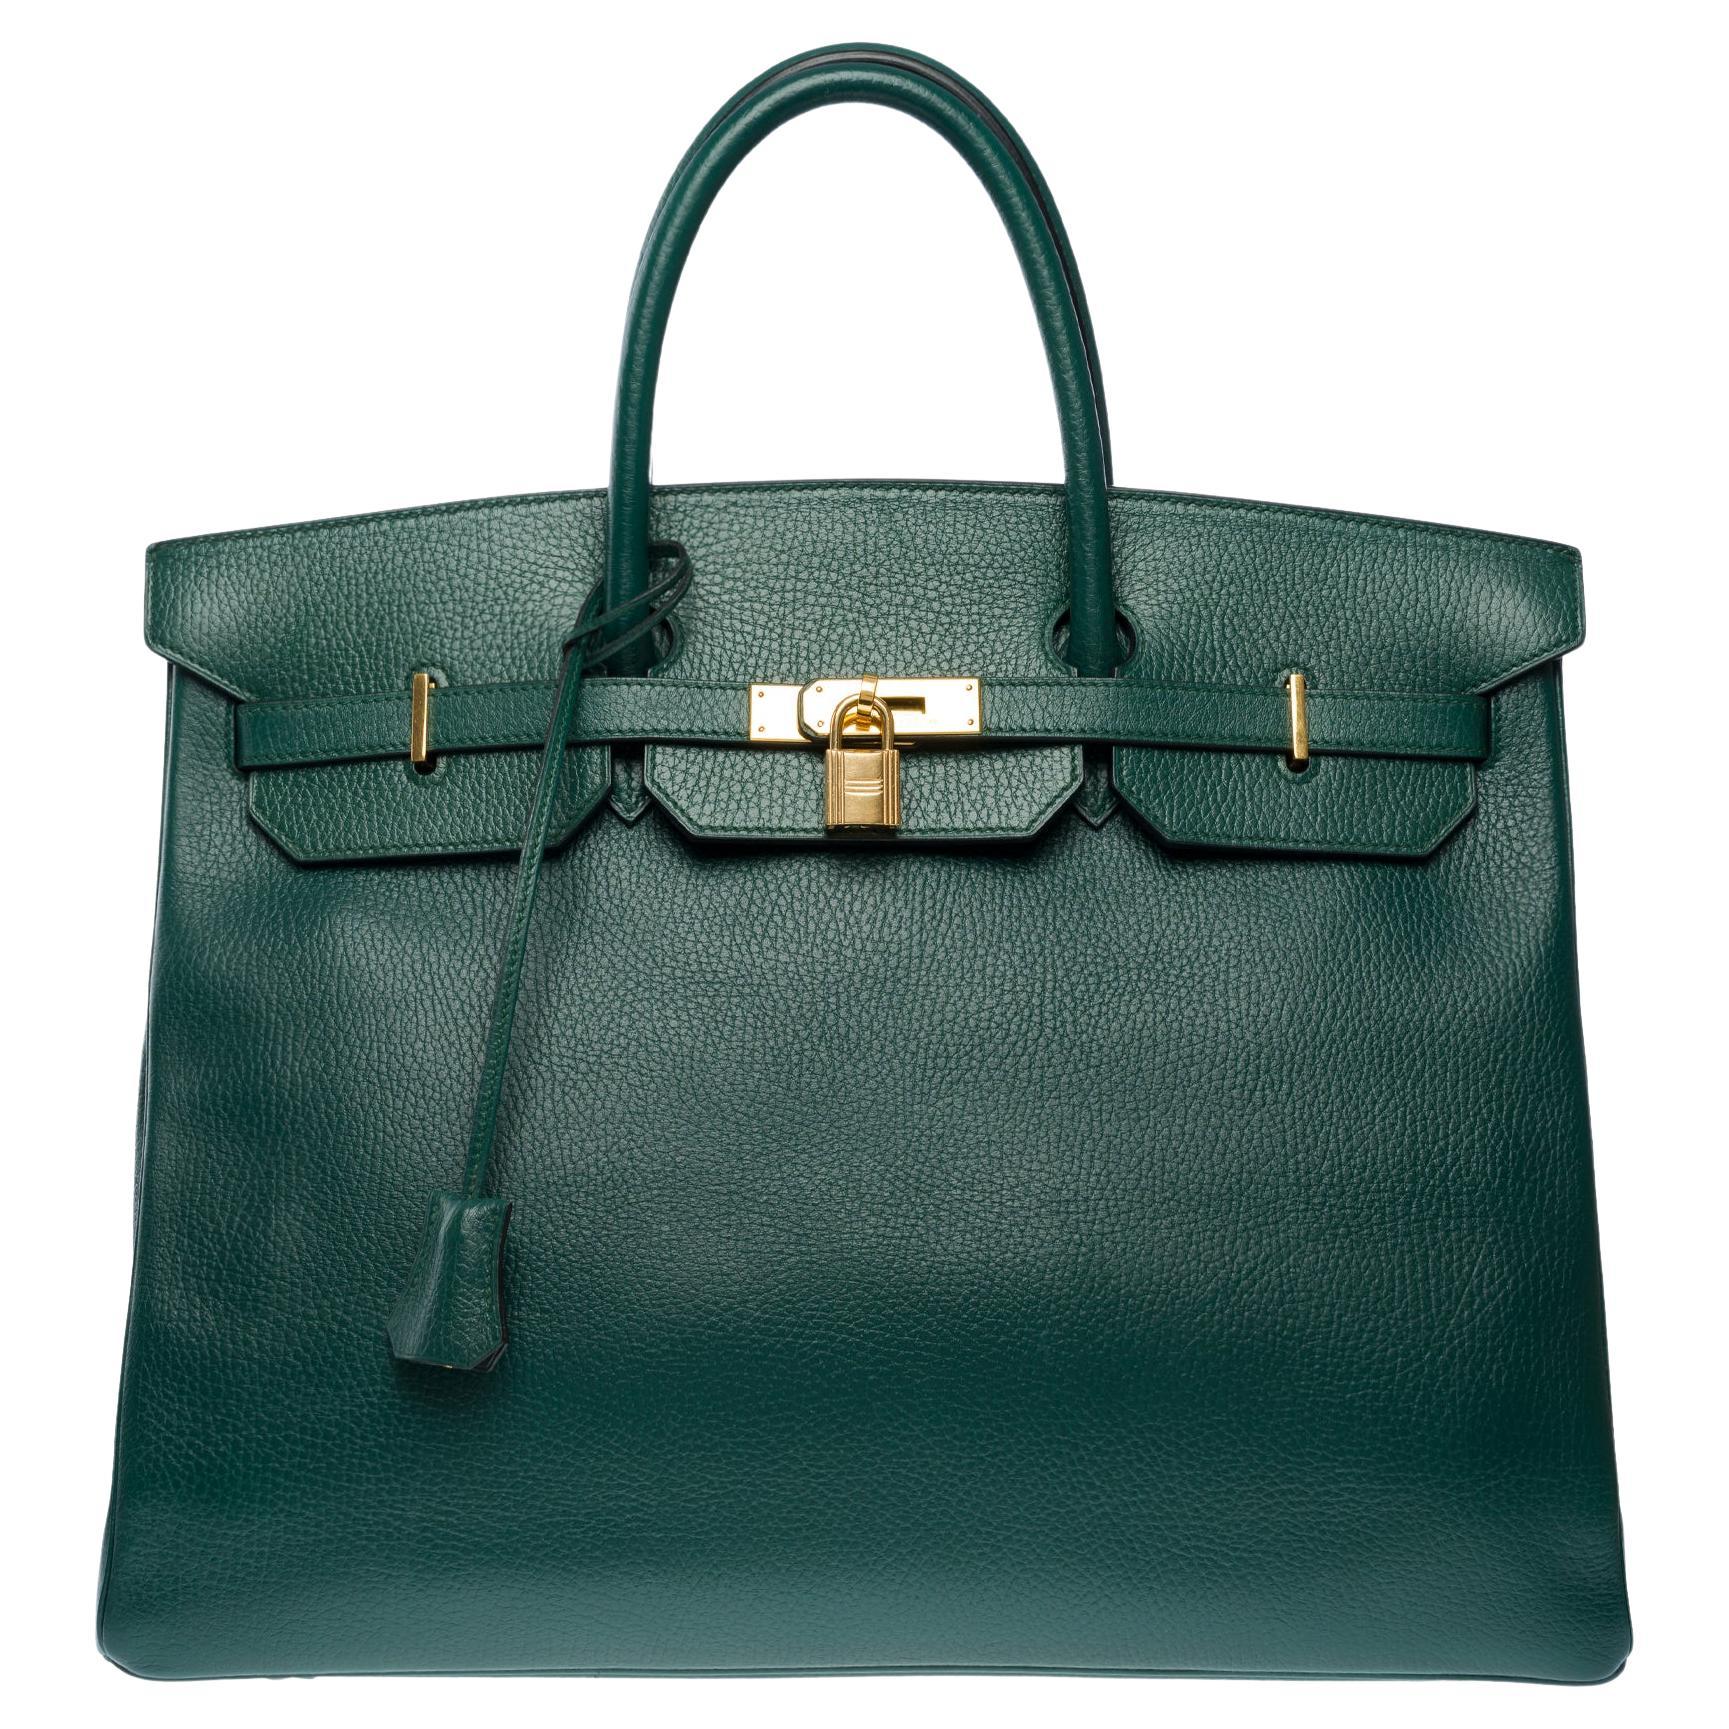 Rare Hermes Birkin 40 handbag in Emerald Green Ardennes Calf leather, GHW